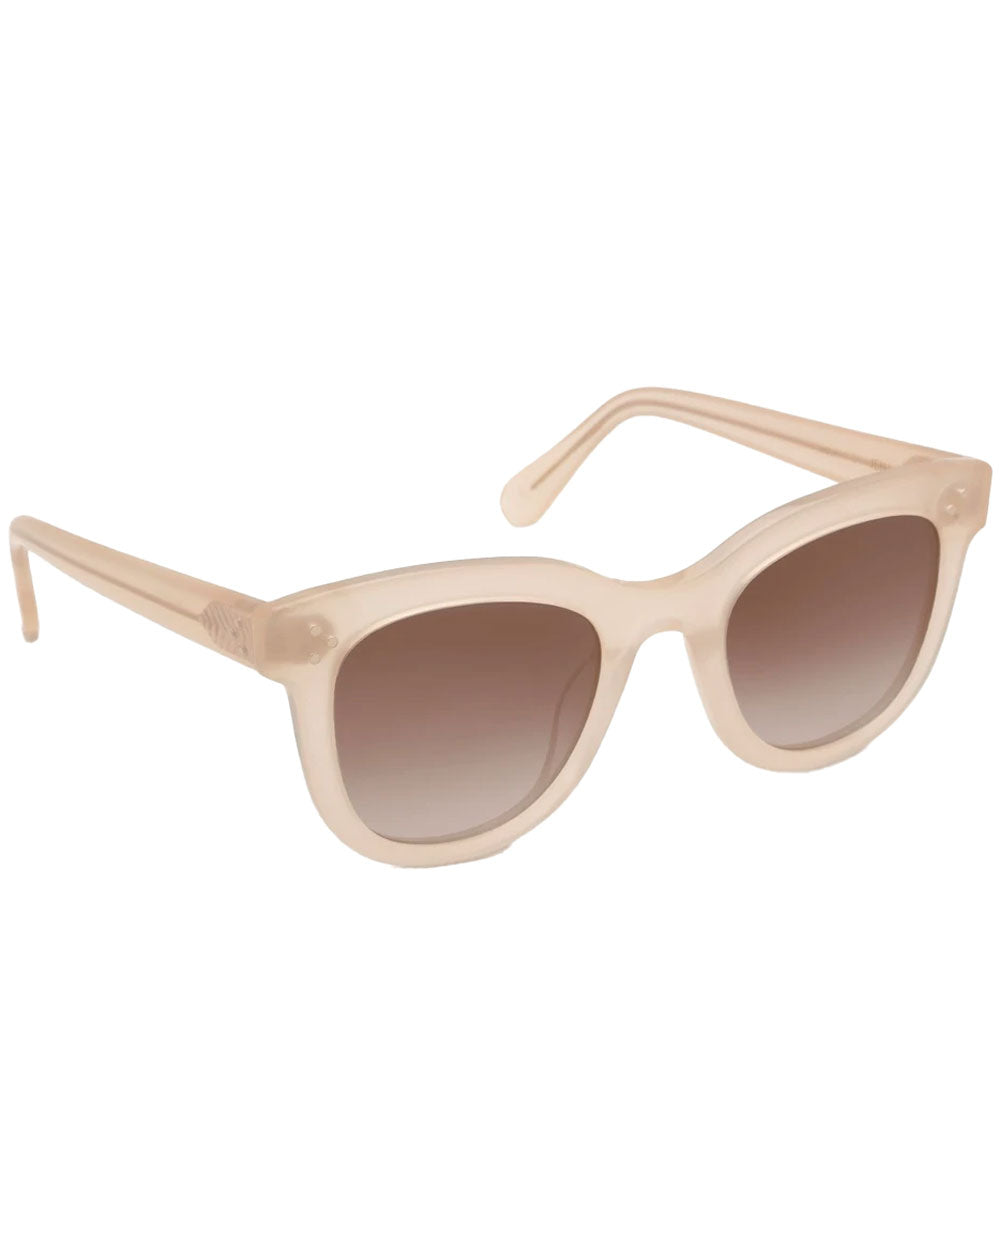 Jena Sunglasses in Mirrored Blonde